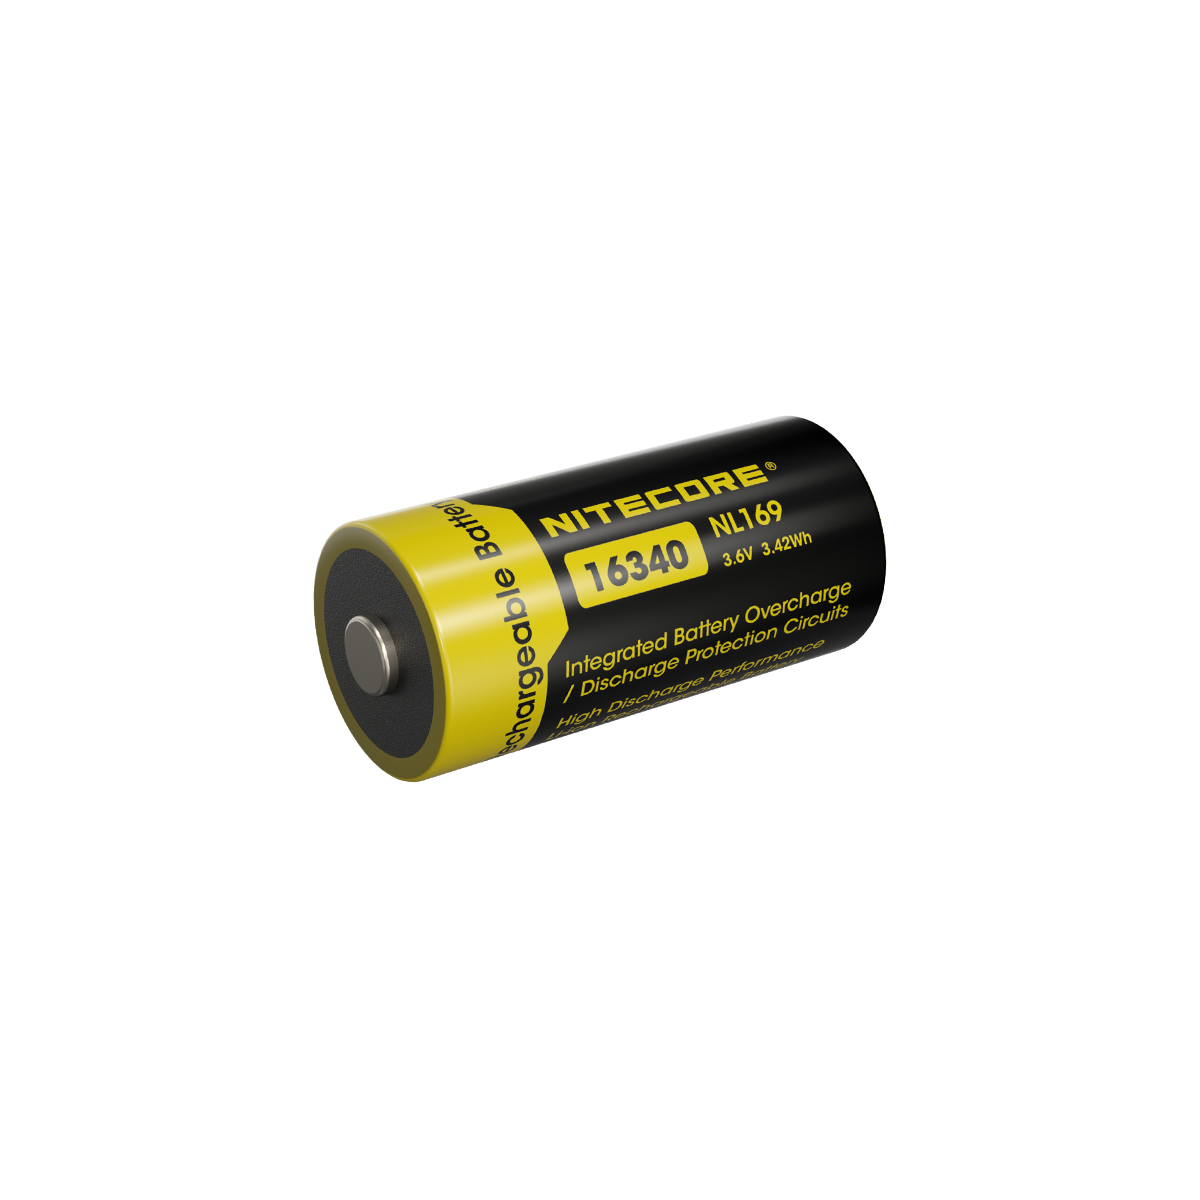 奈特科尔电池 NL169 950mAh 3.6V 电池